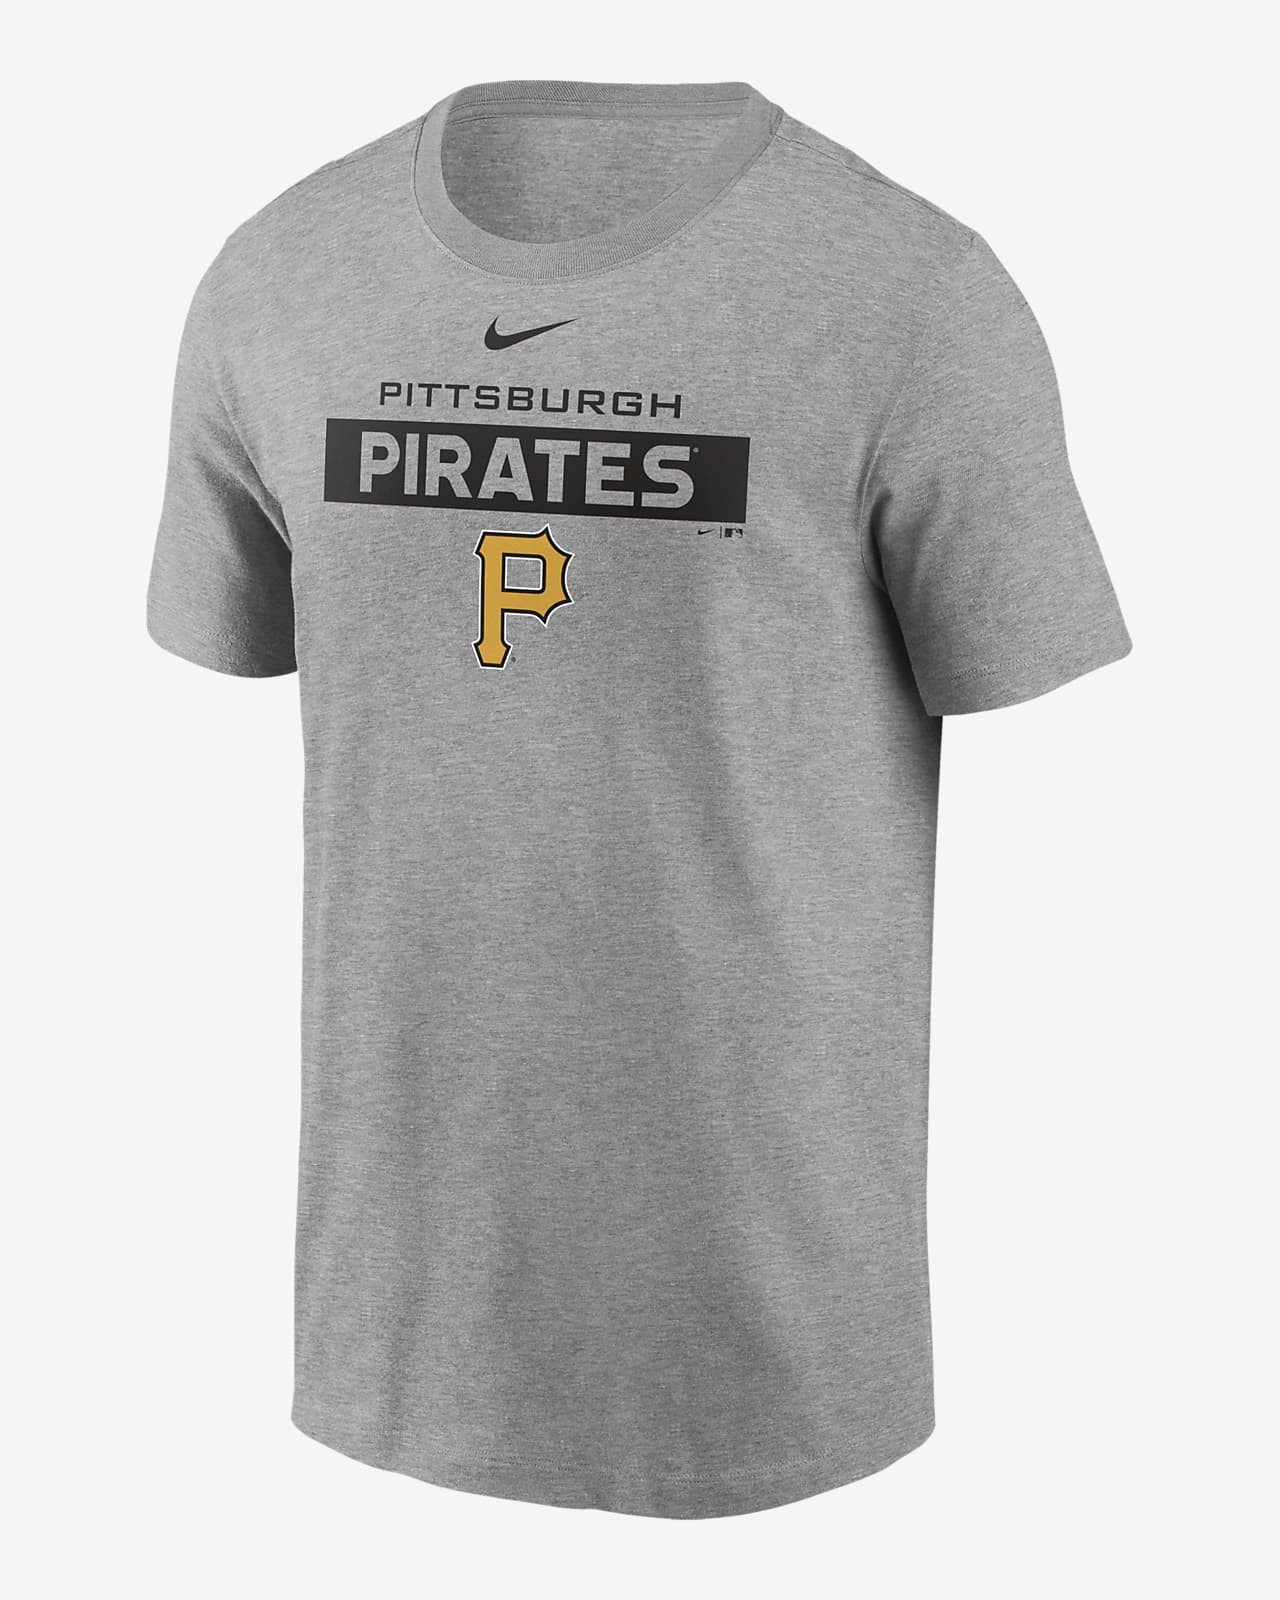 Nike Team Issue (MLB Pittsburgh Pirates) Men's T-Shirt.